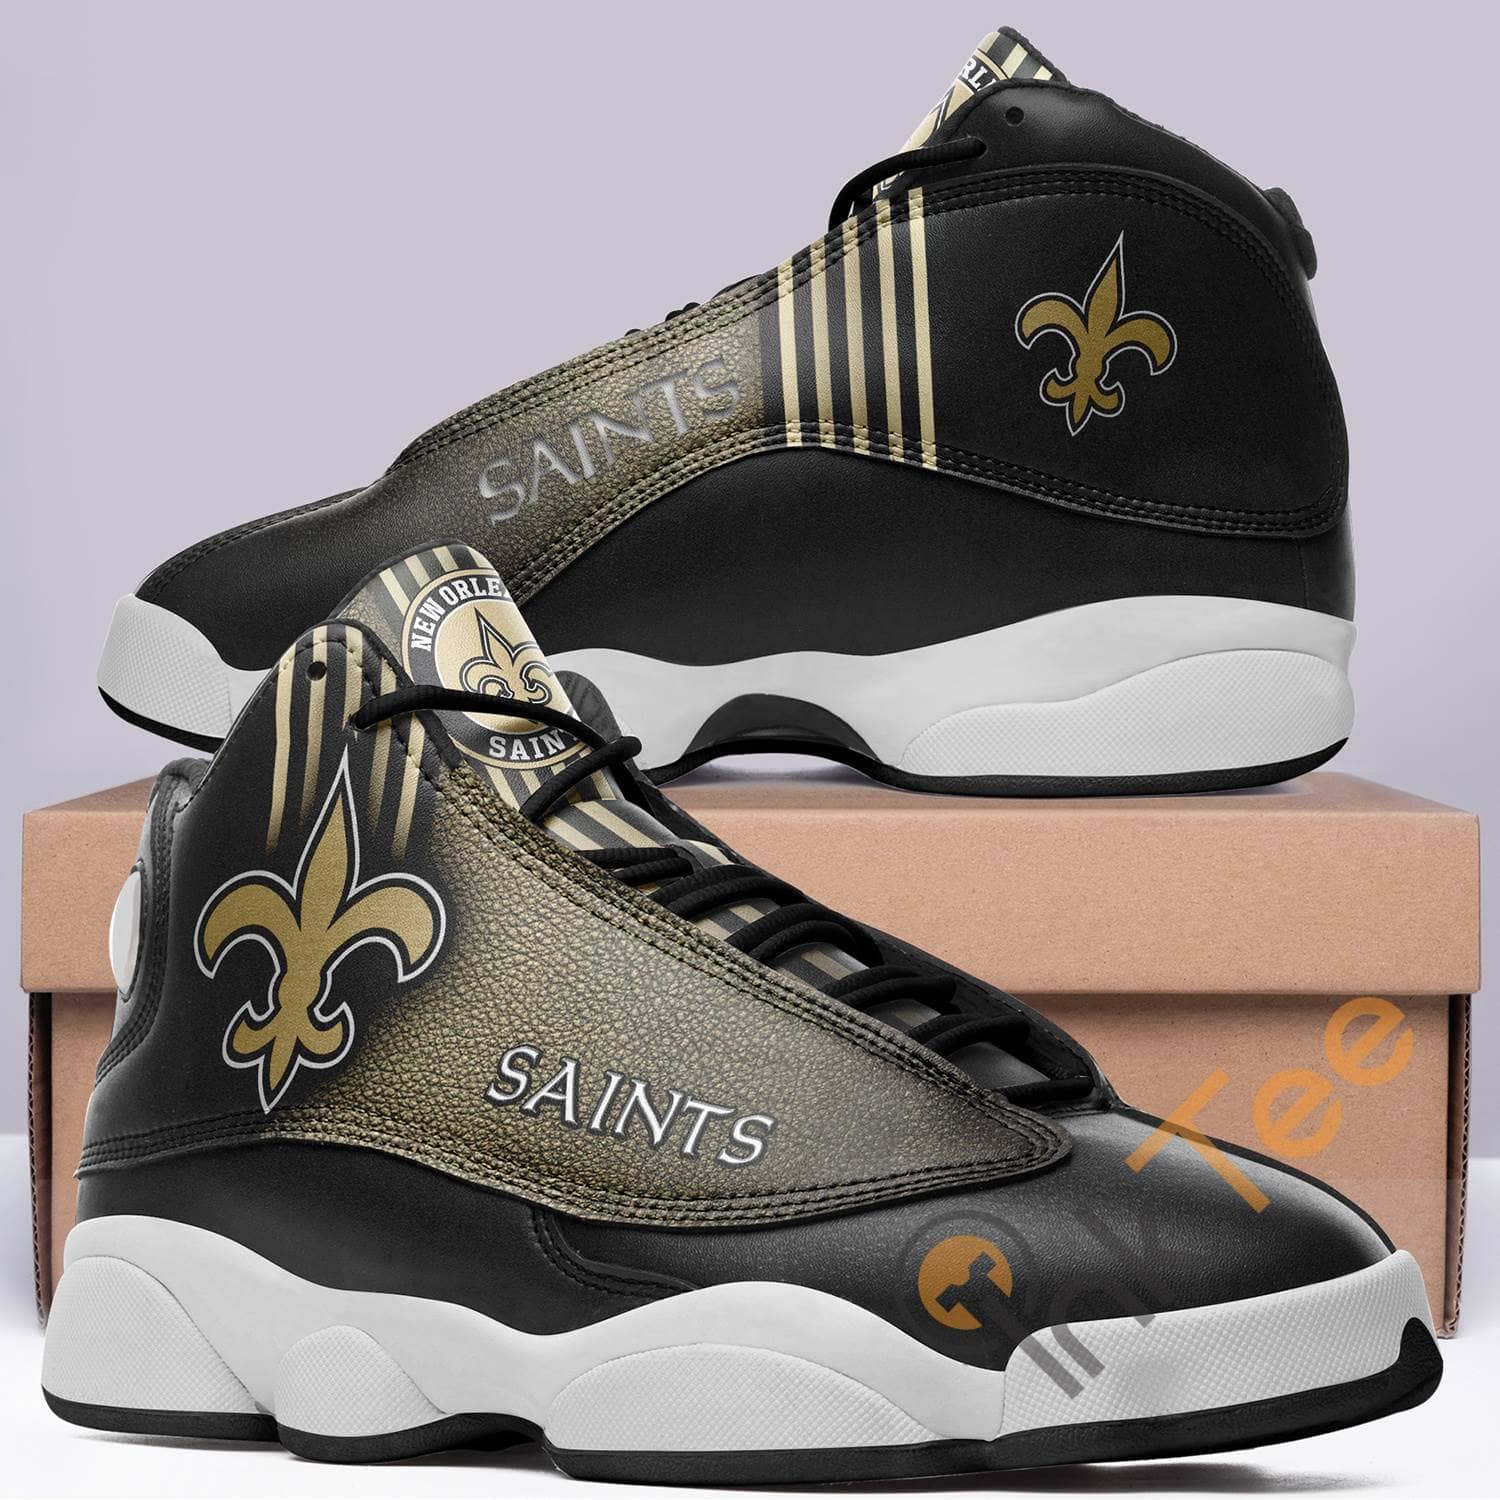 New Orleans Saints Team Aj13 Air Jordan Shoes